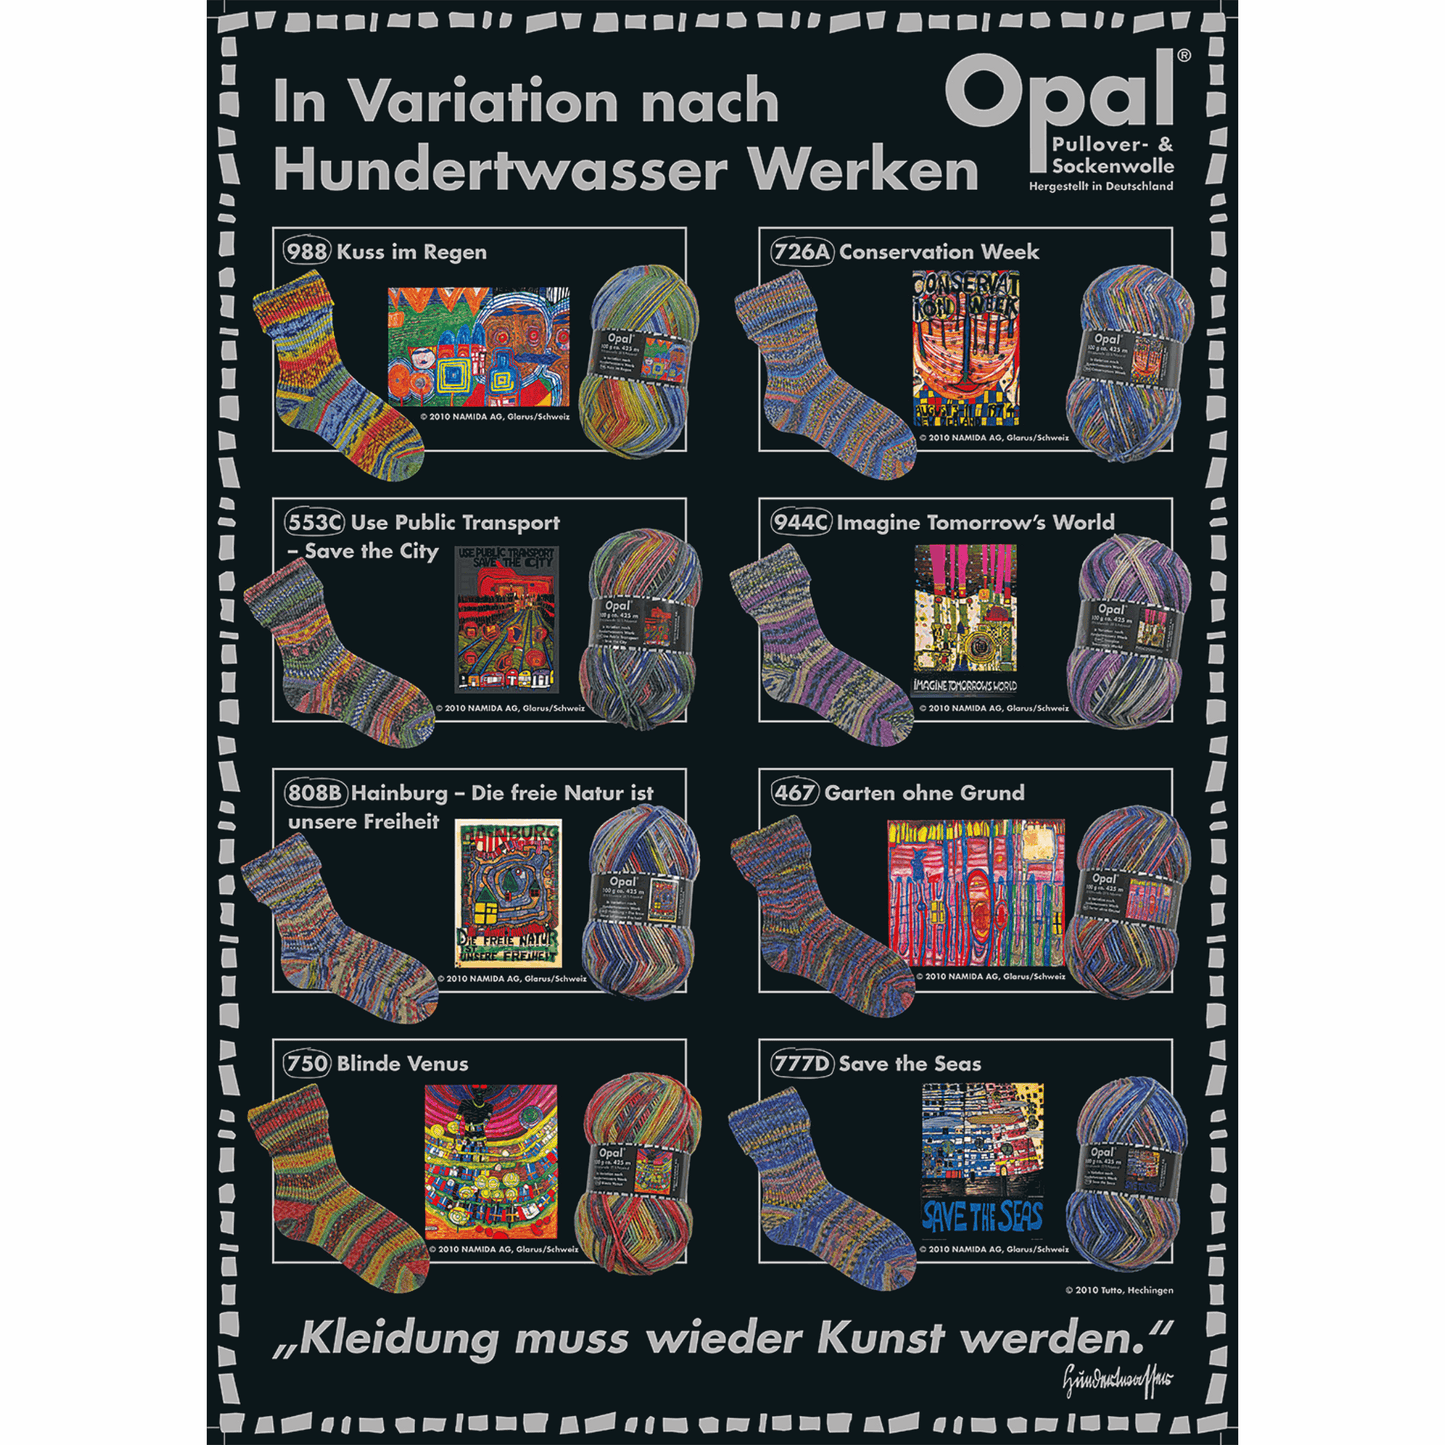 Opal Hundertwasser III 100 G, 97740, color blind venus 3206